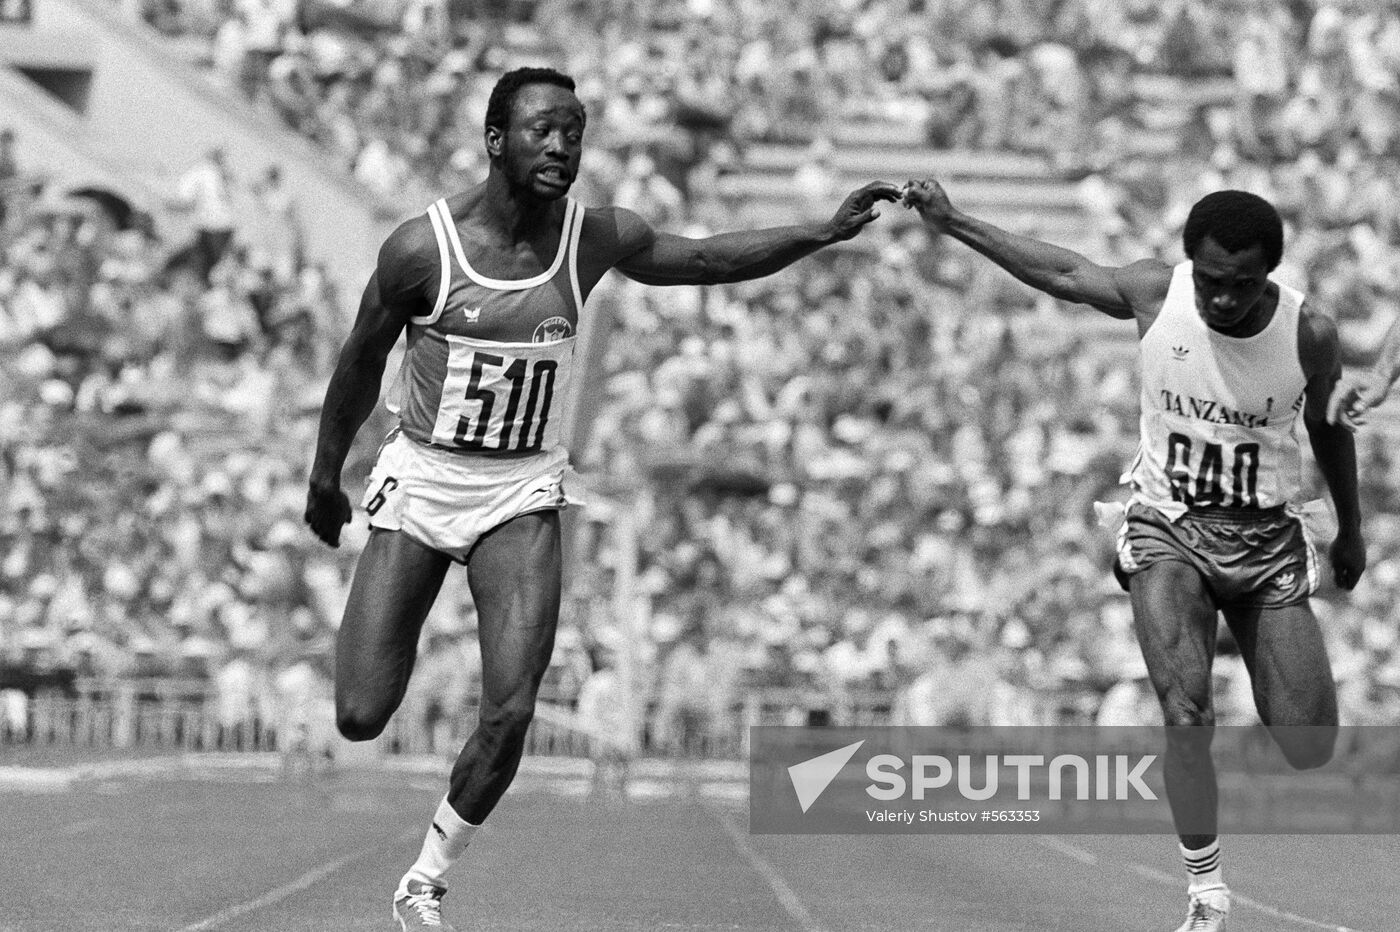 Athletes Adio (Nigeria, № 510) and Ali (Tanzania, № 640)